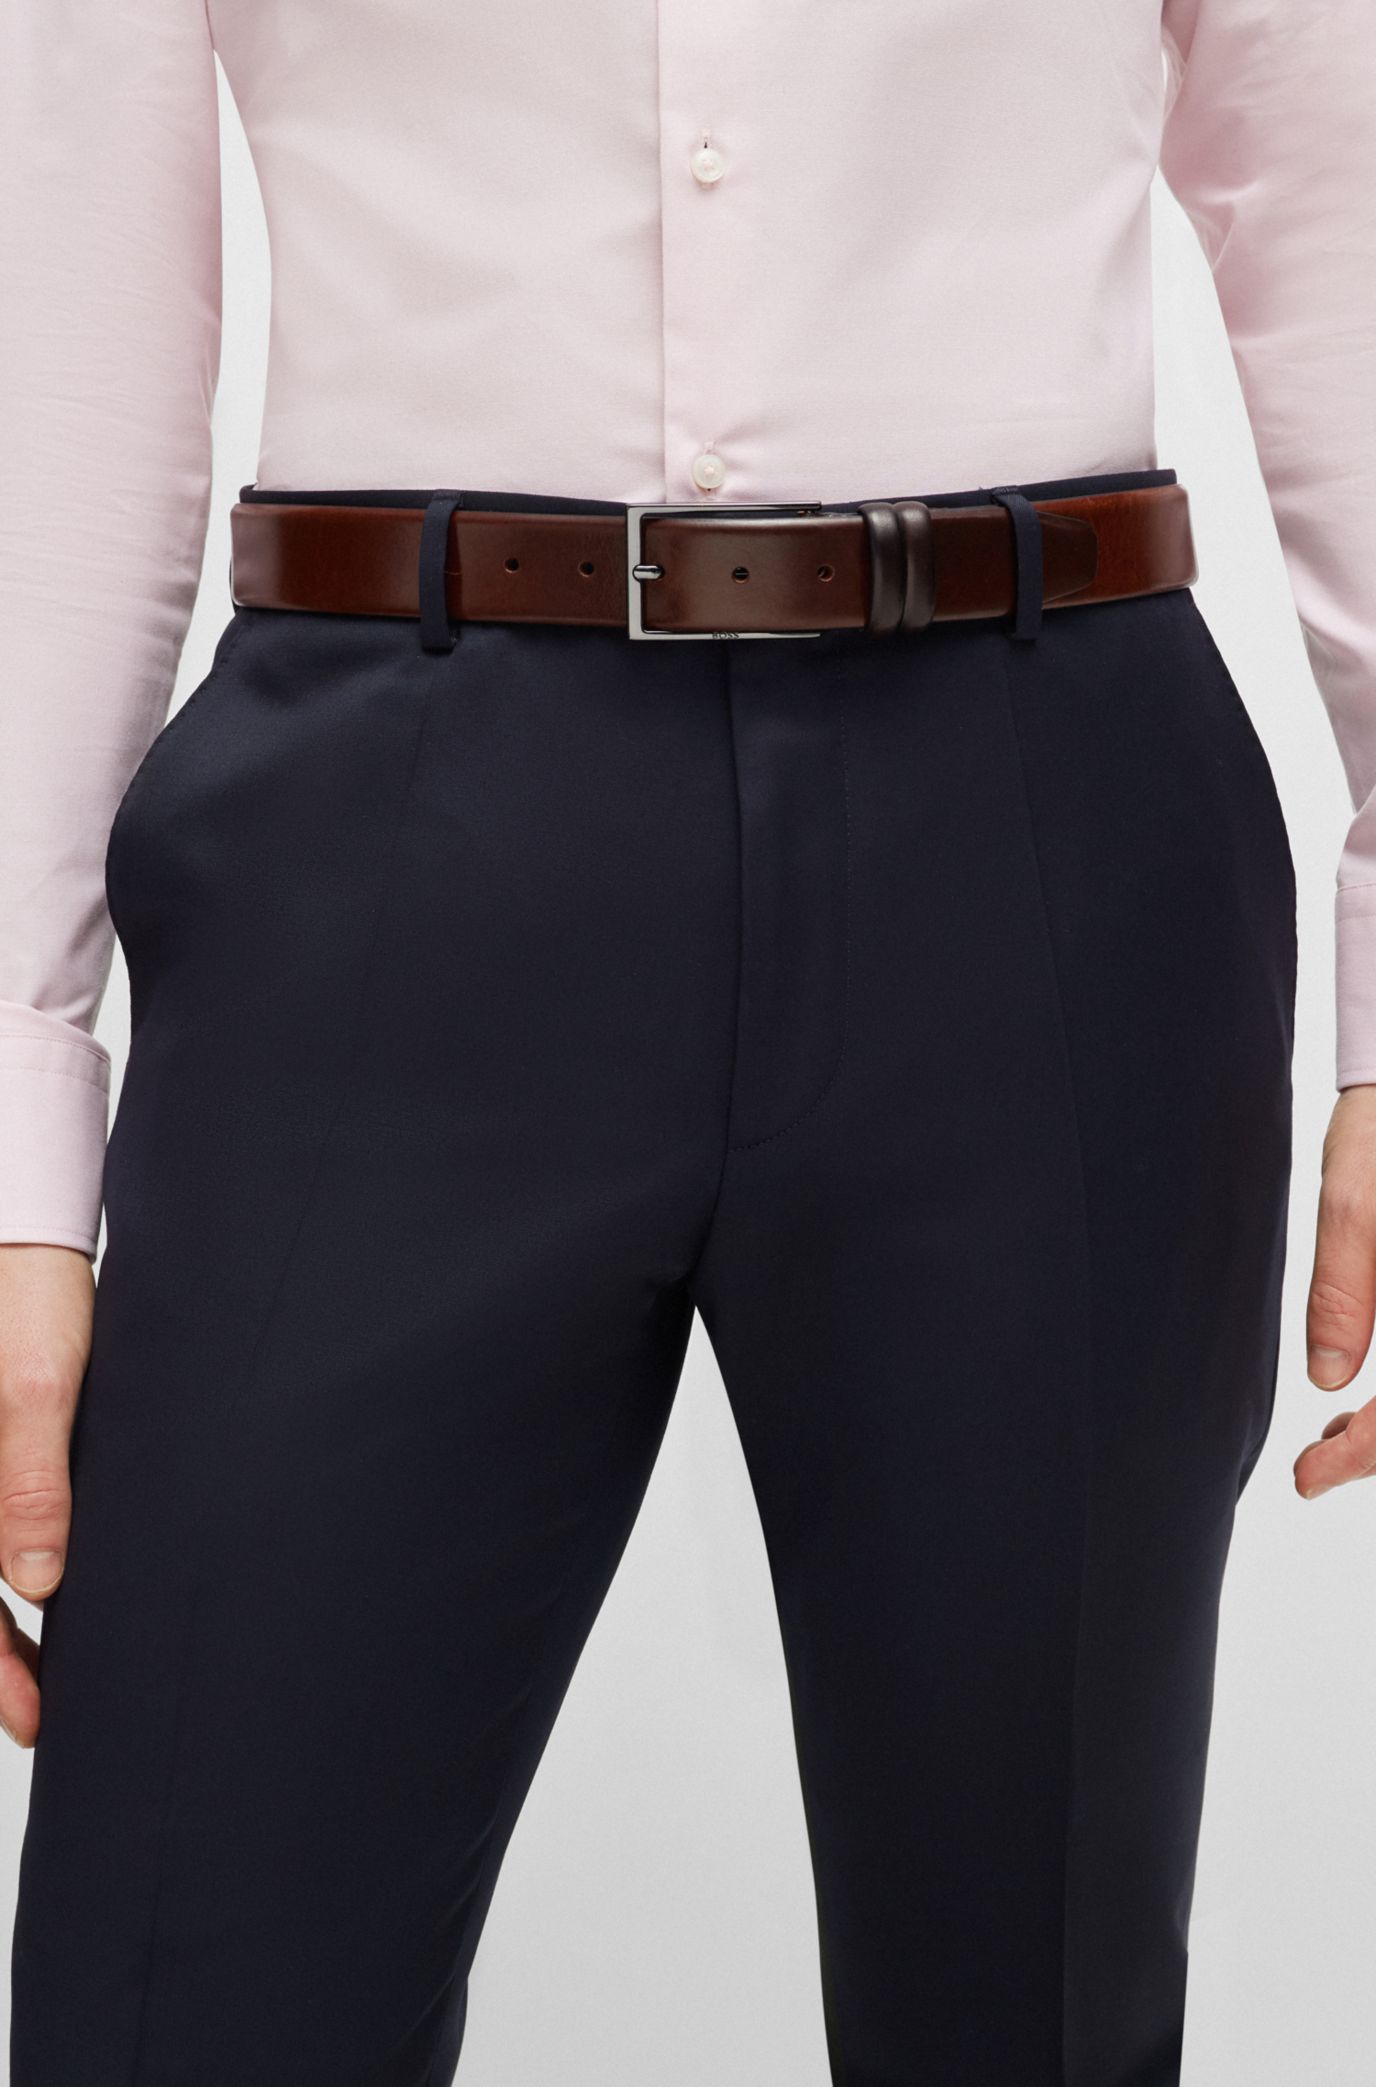 Ufficio Men's Genuine Leather Jeans Belt (Casual, Tan)